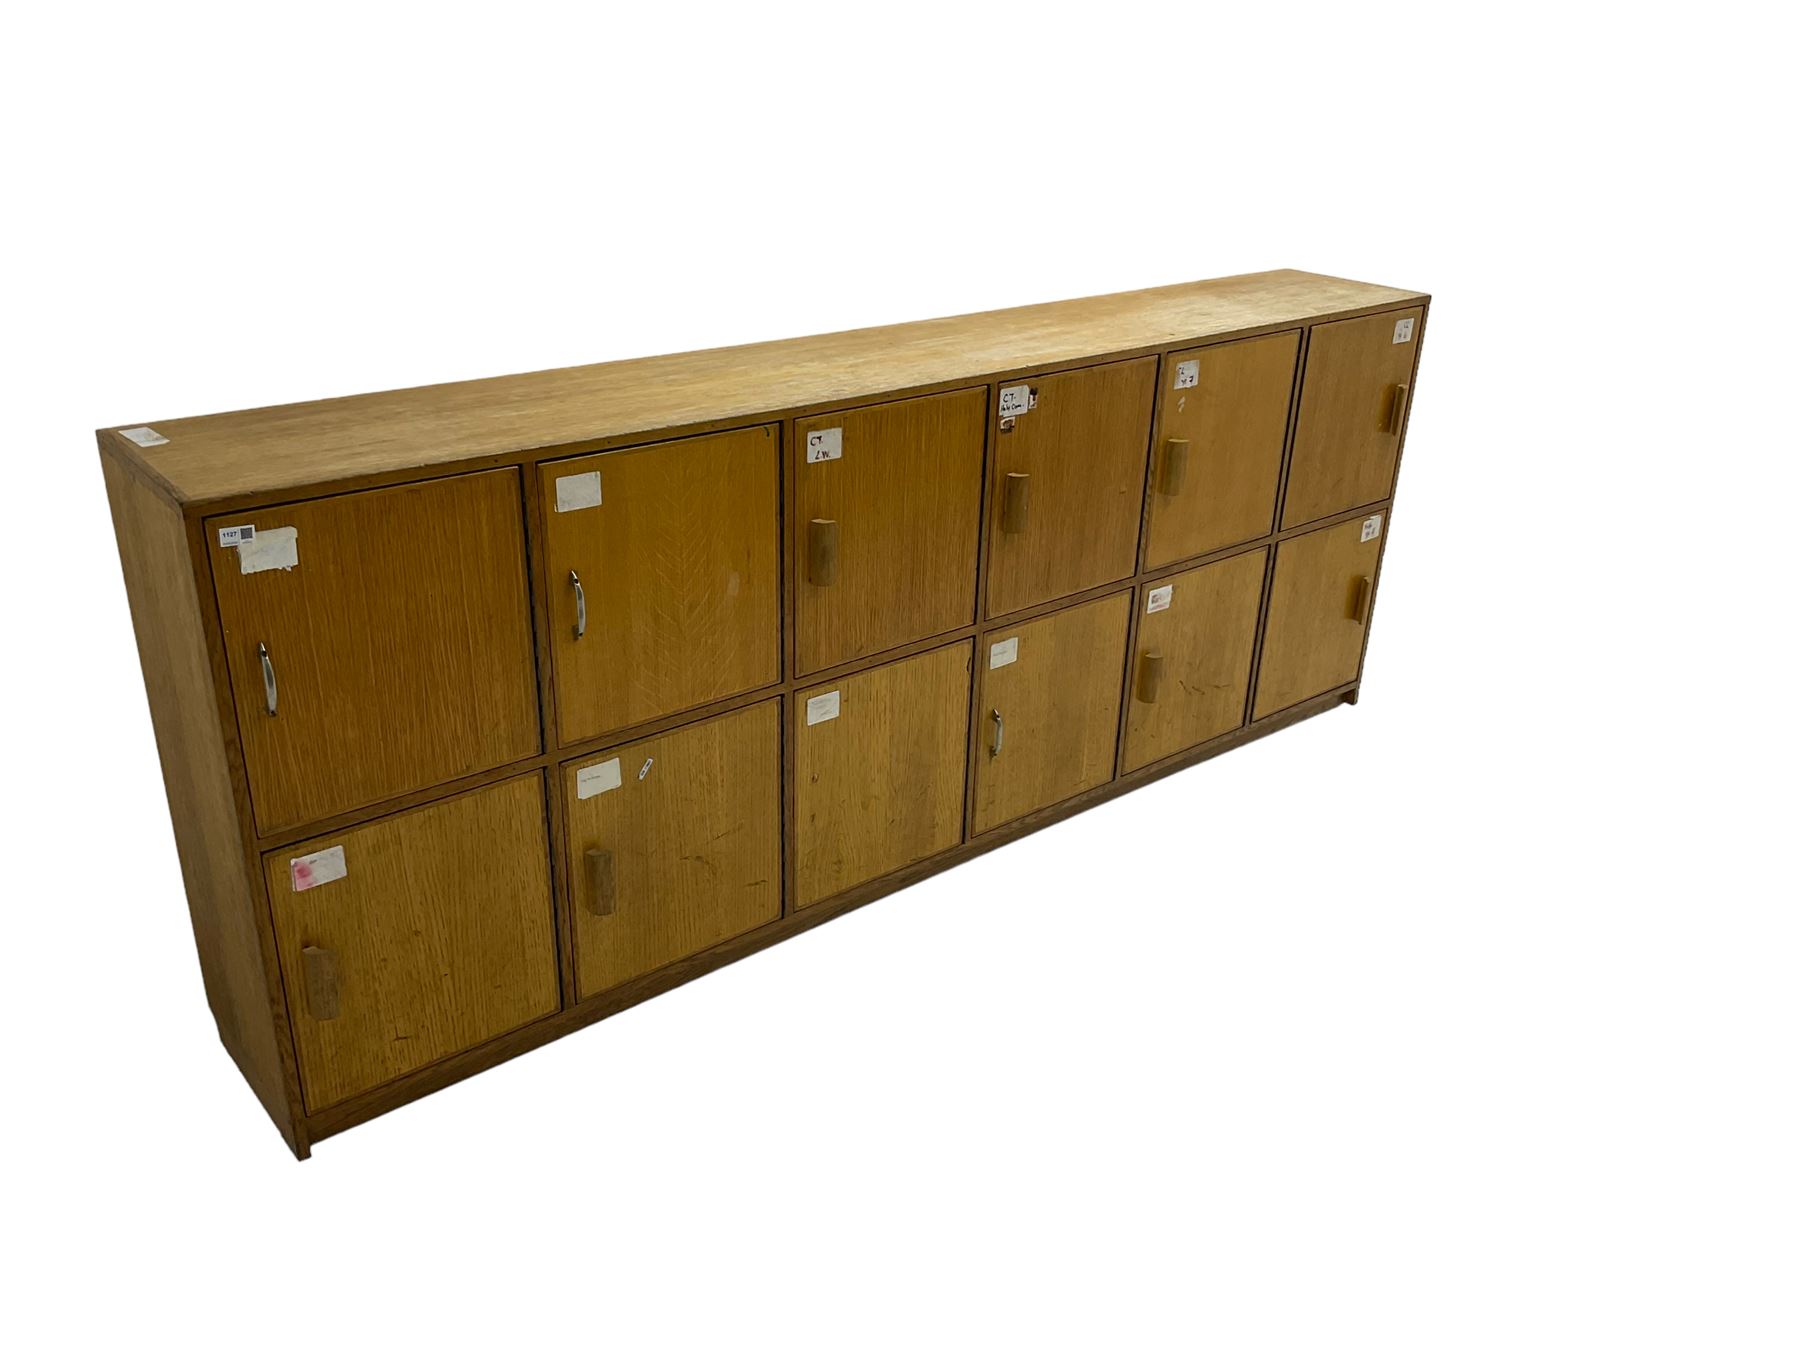 20th century oak bank of lockers - Image 4 of 6